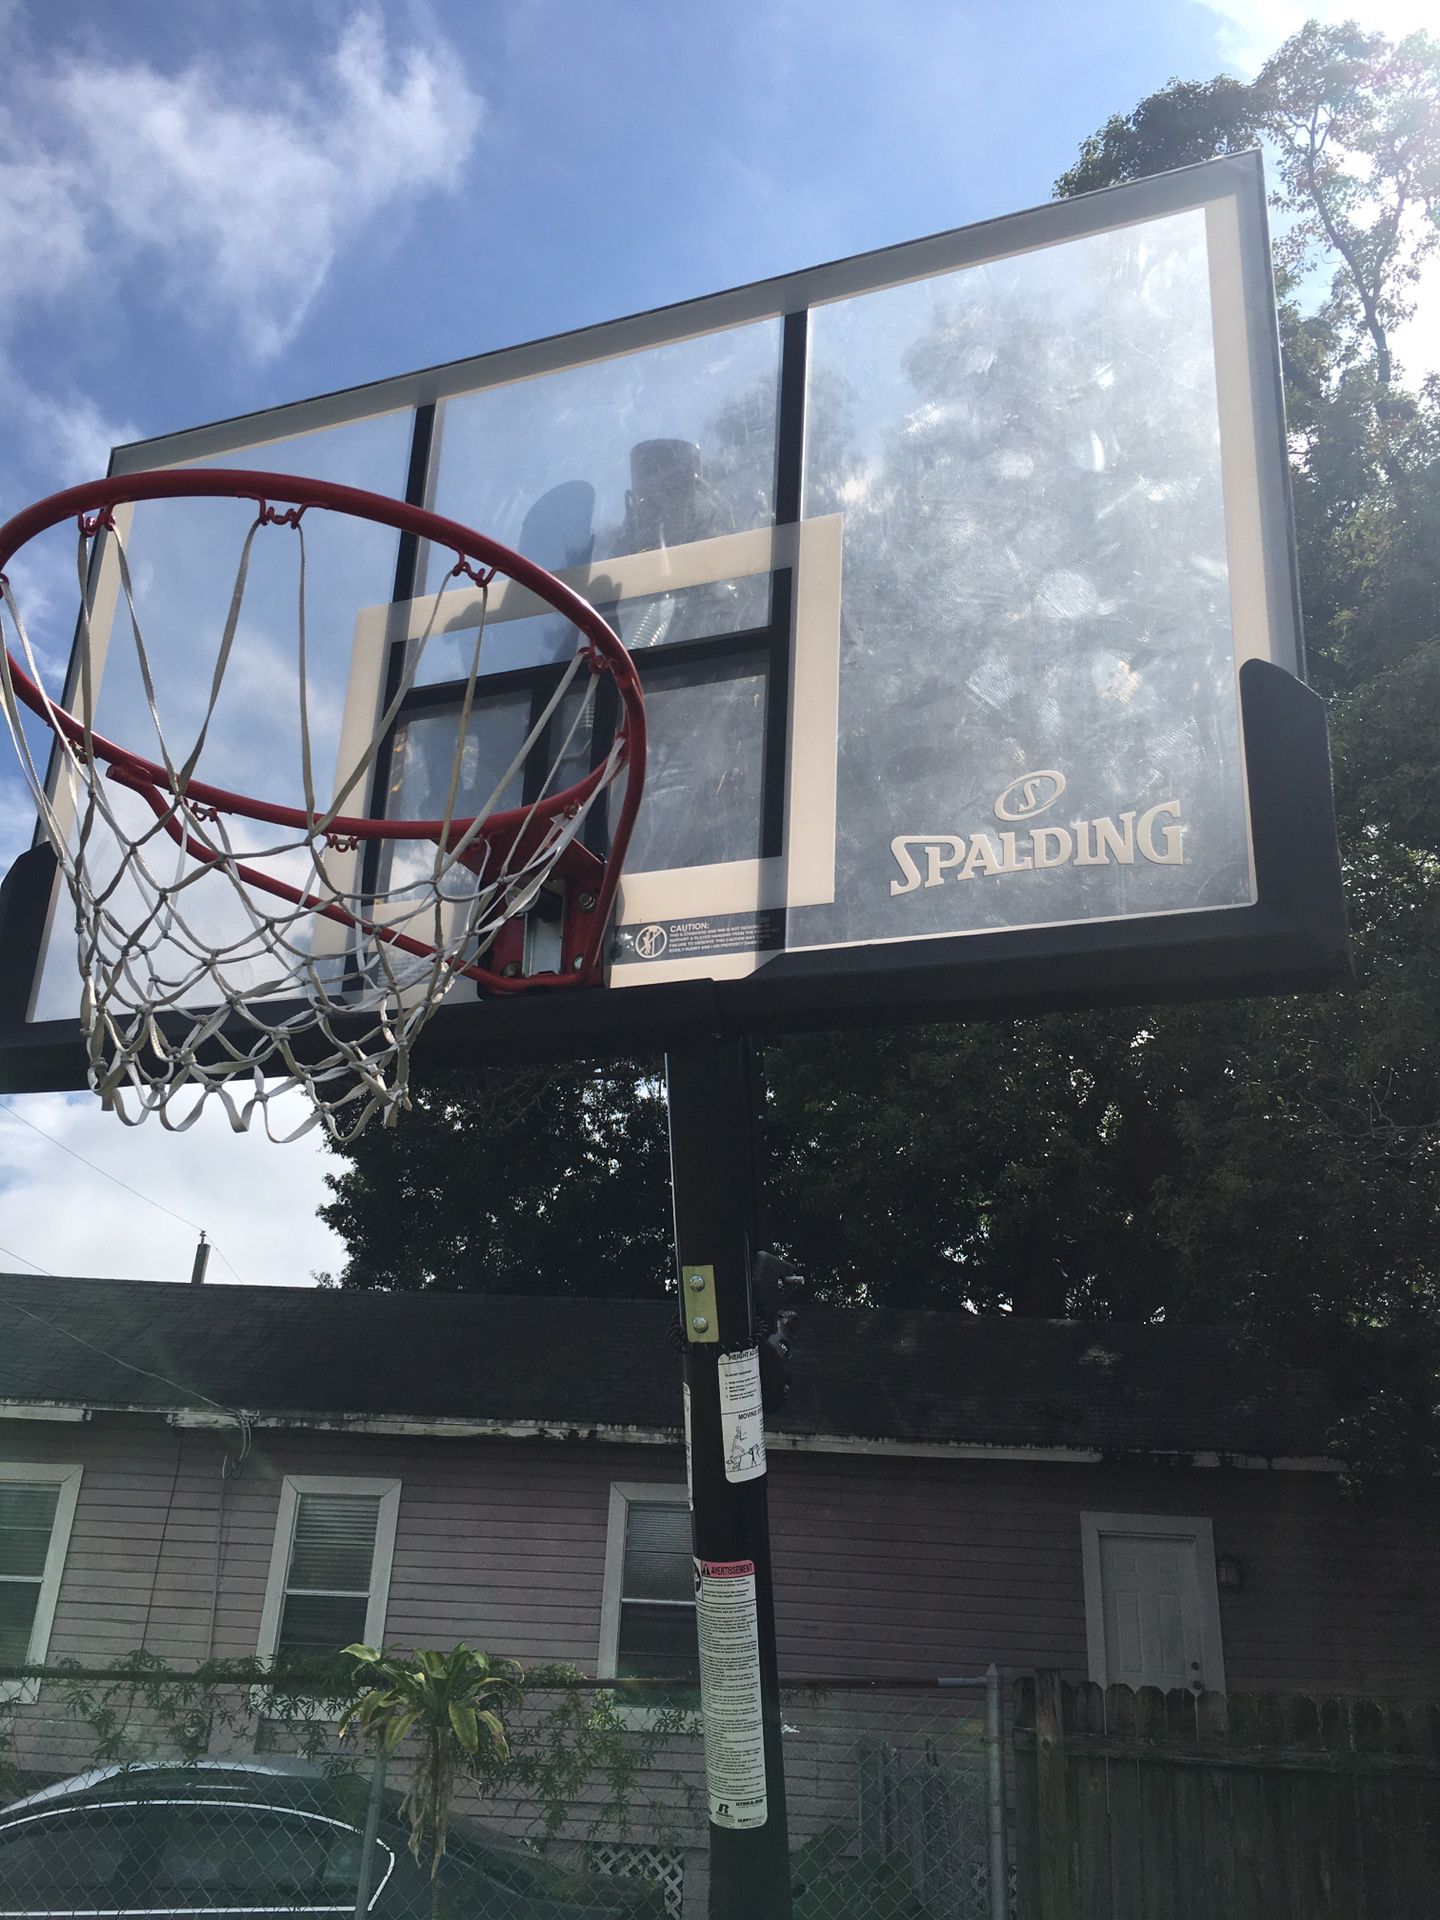 54 Inch Spalding Basket Ball Hoop